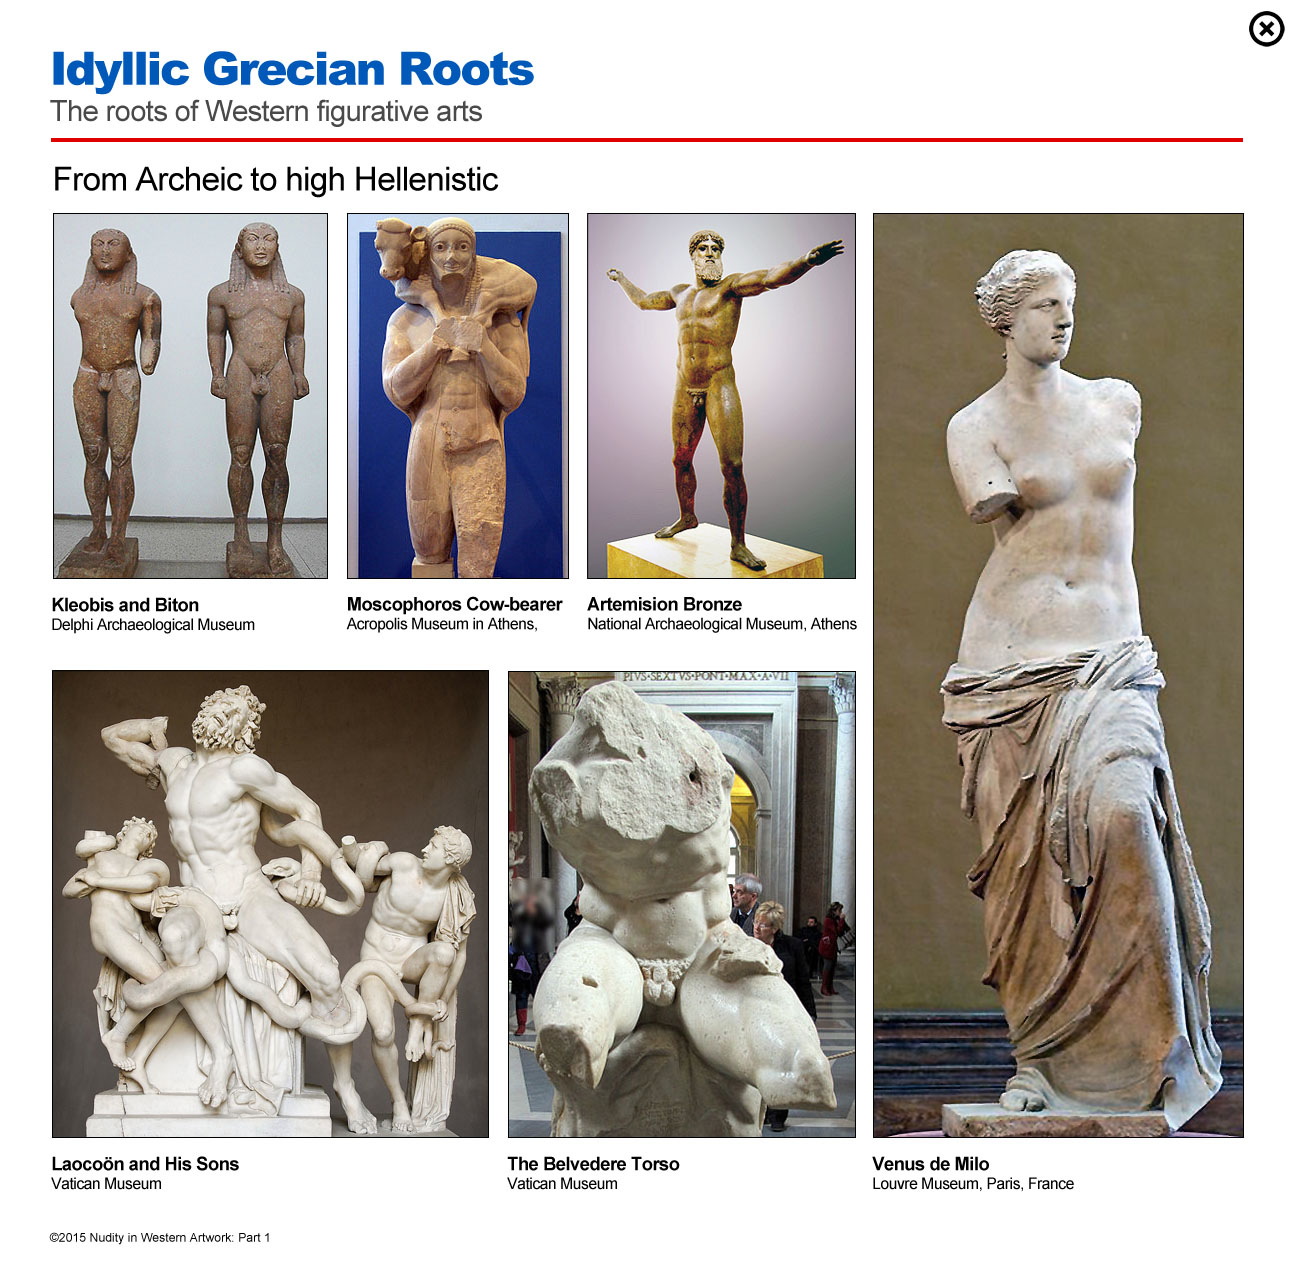 Idyllic Grecian Roots